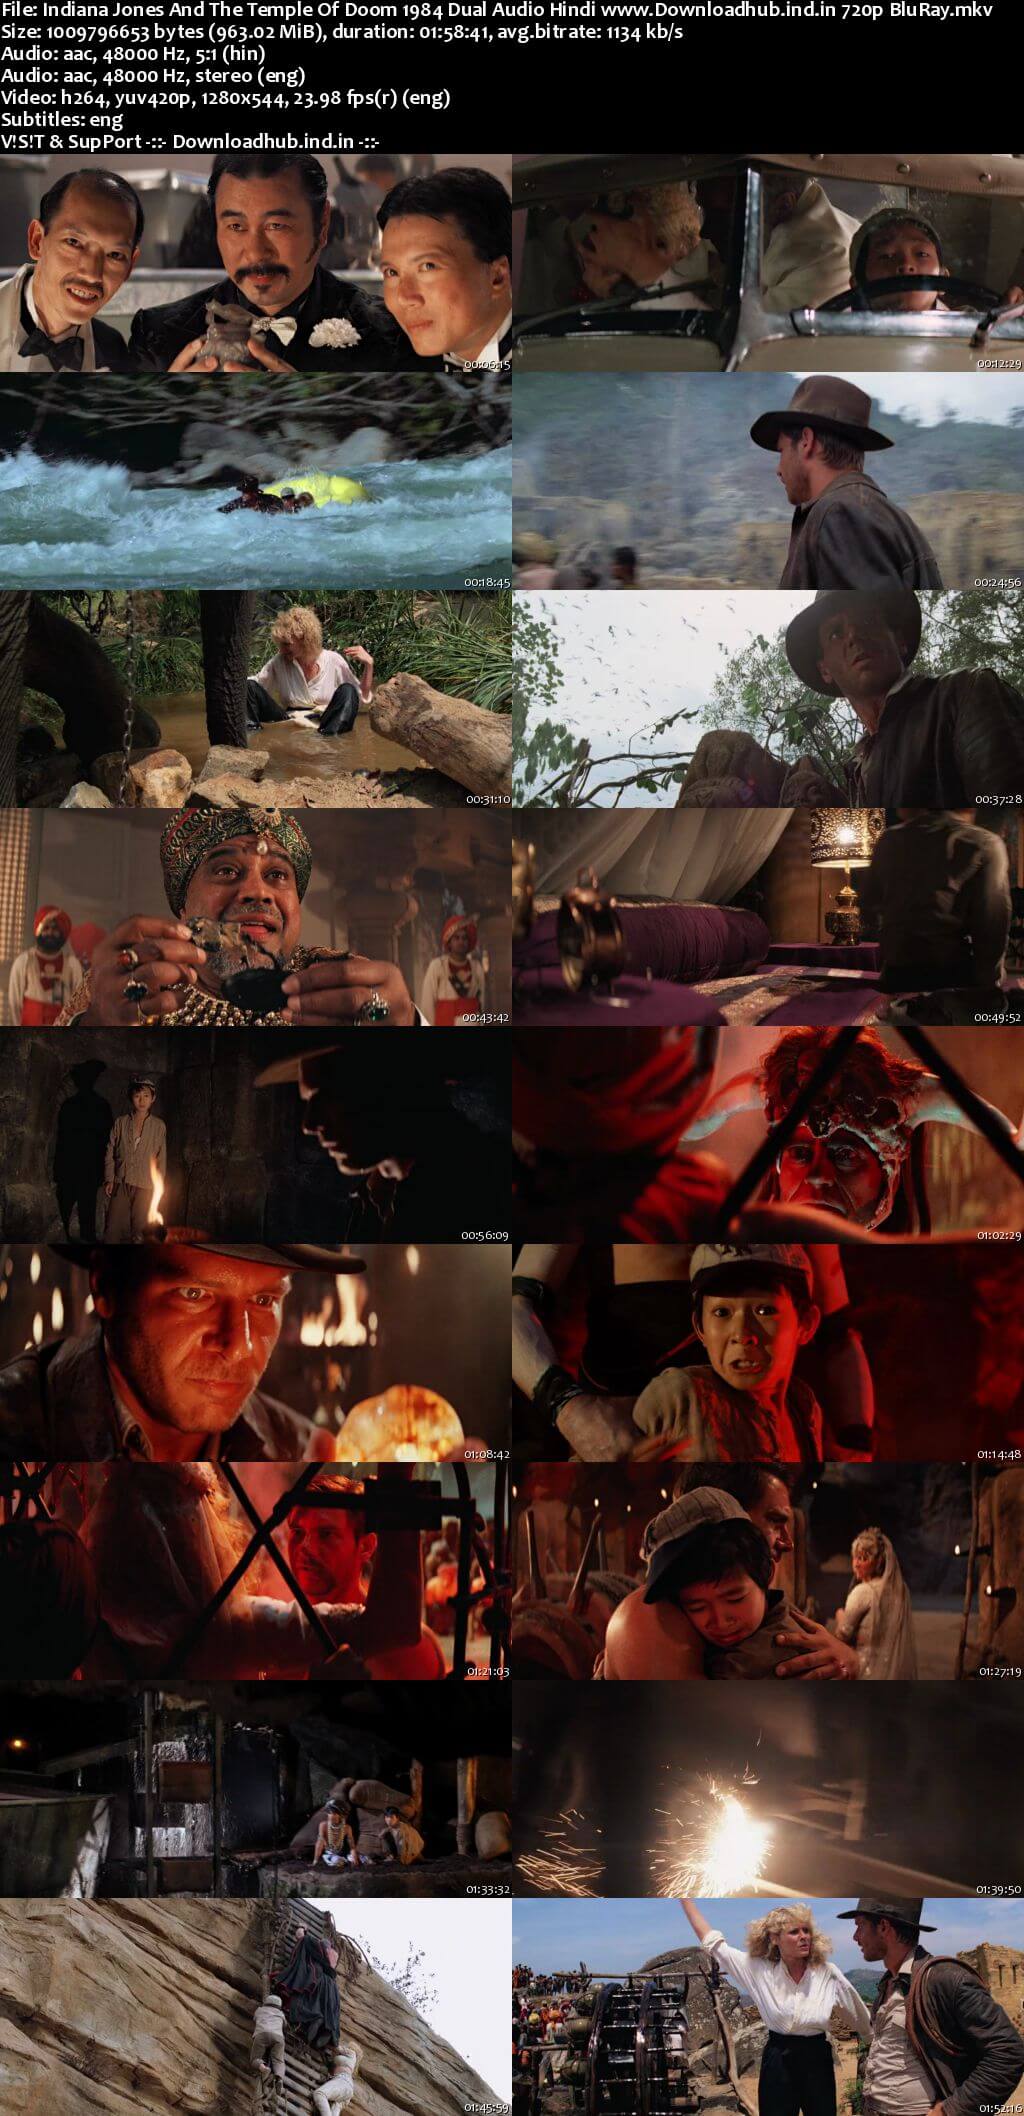 Indiana Jones and the Temple of Doom 1984 Hindi Dual Audio 720p BluRay ESubs